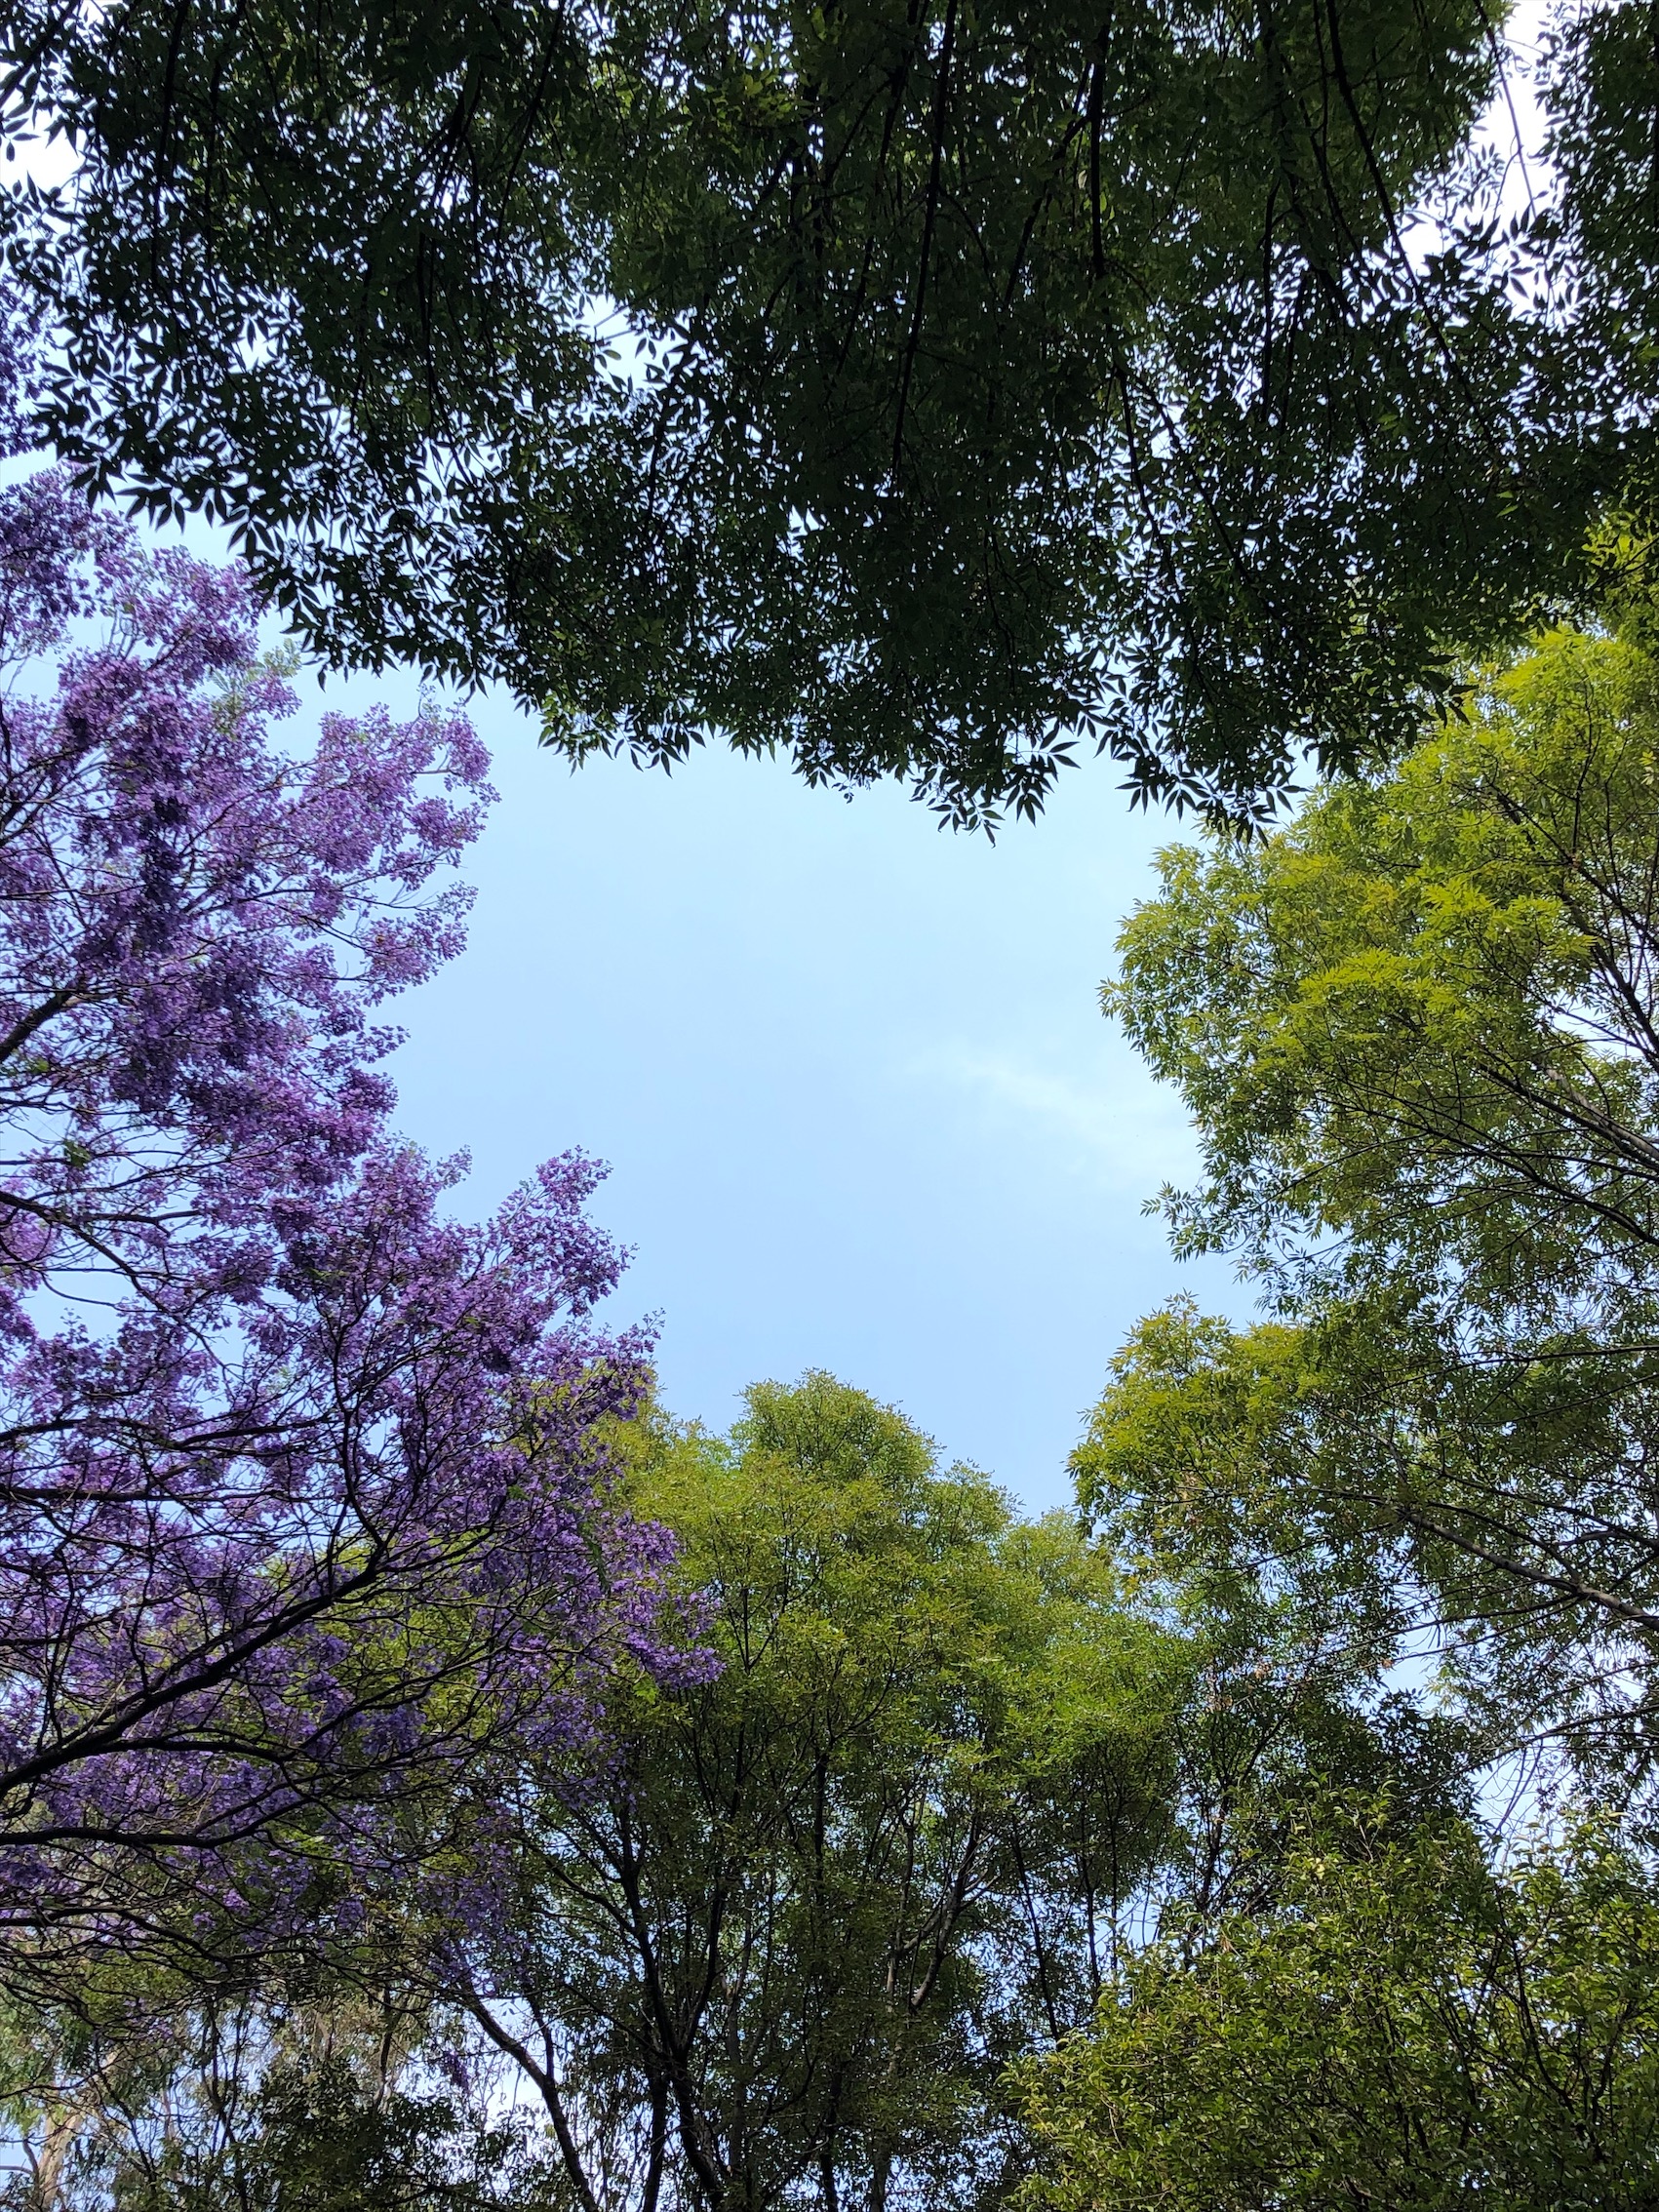 leaves and purple jacaranda flowers against the blue sky